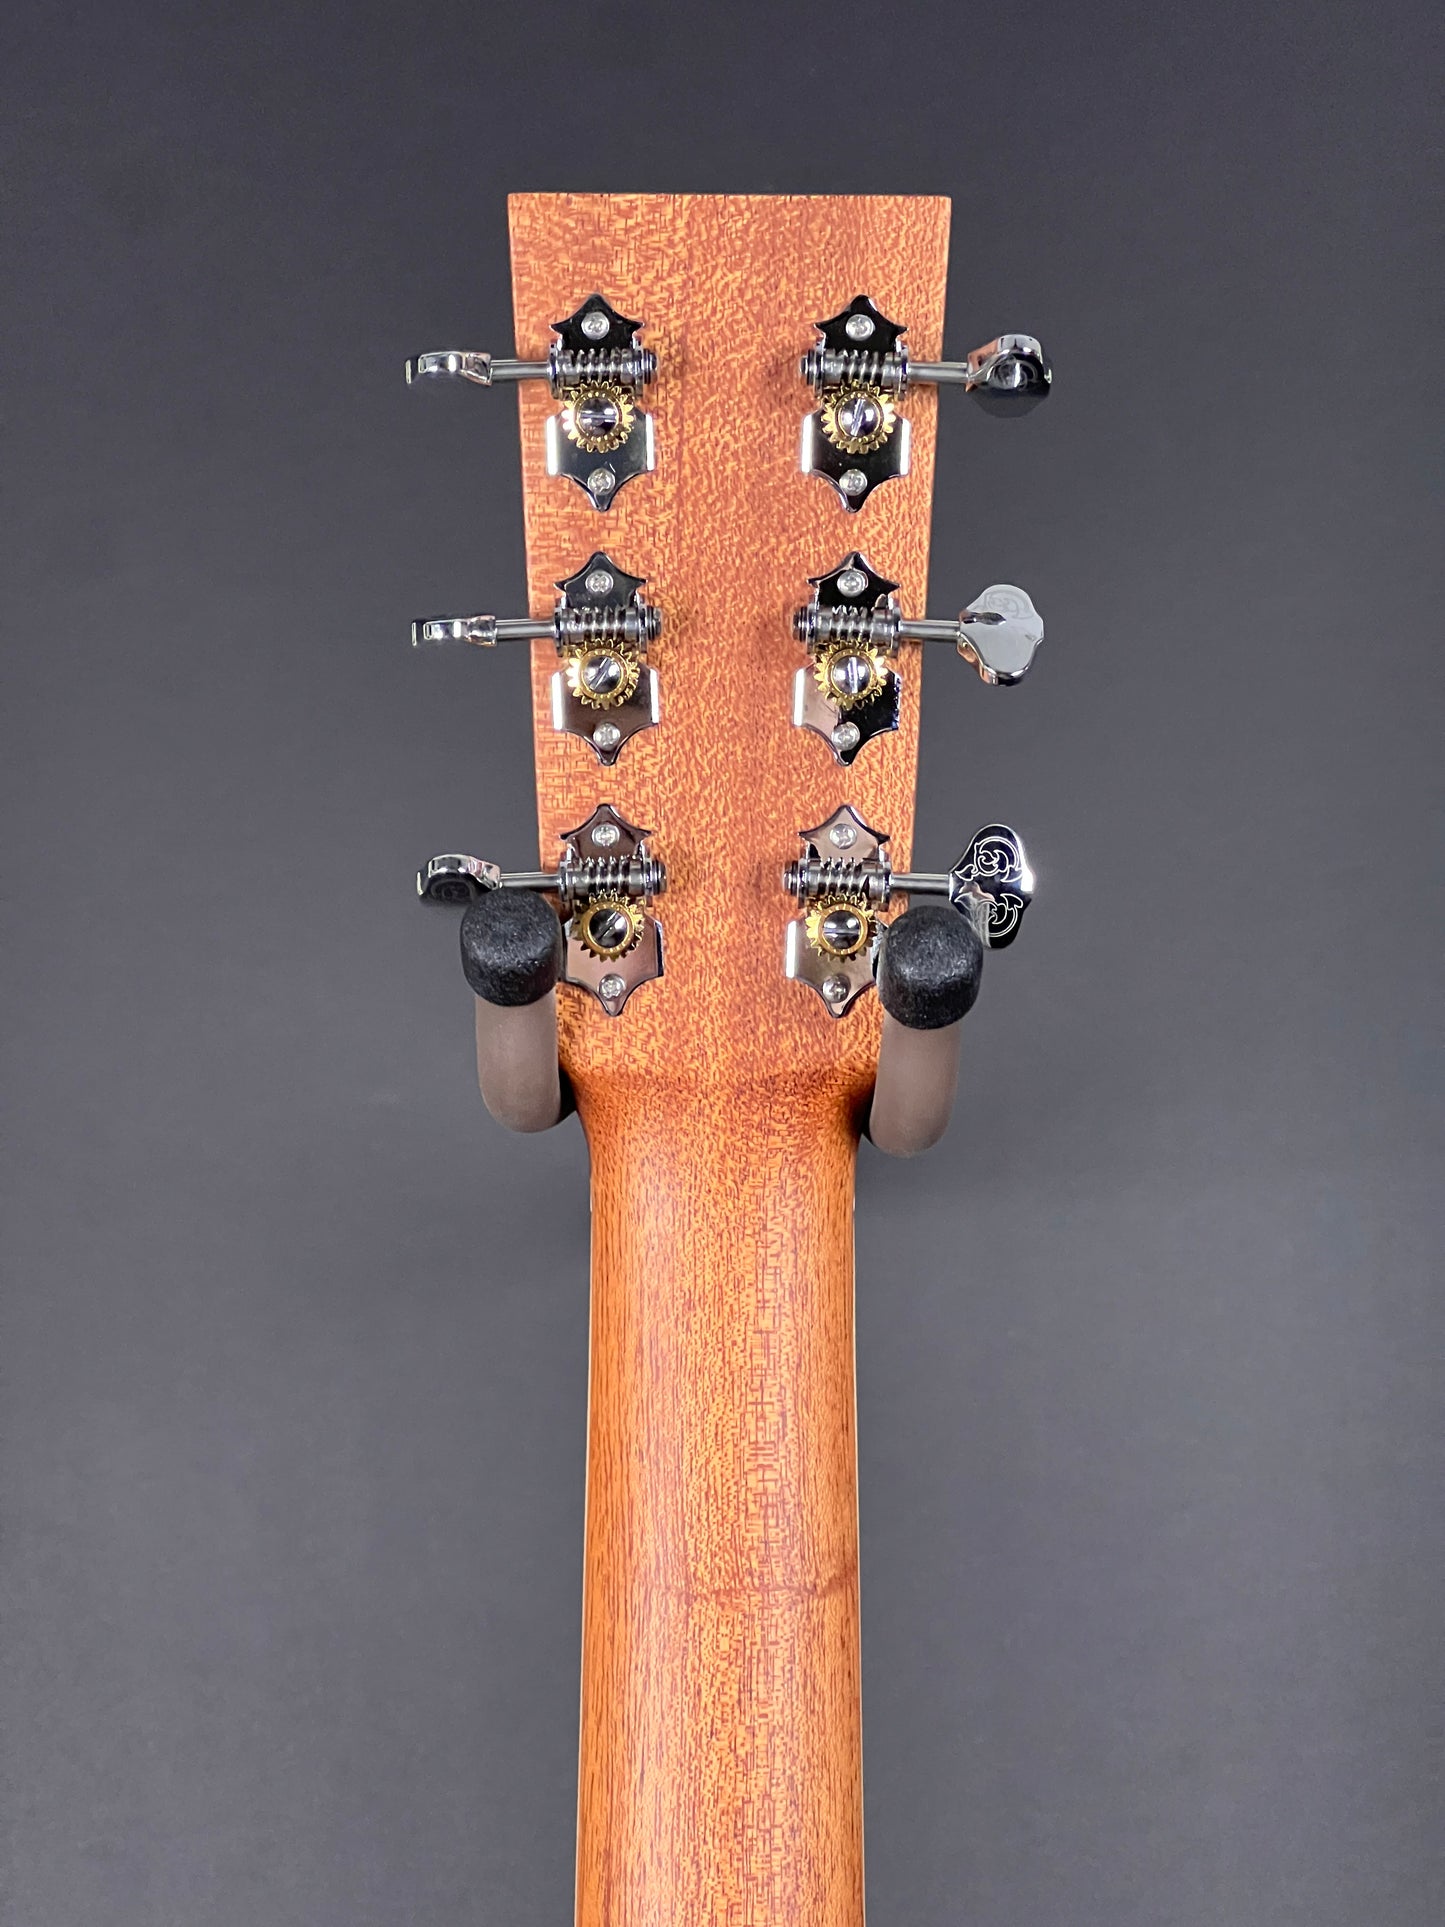 Larrivée Bluegrass Special D-40R Sitka Spruce/Indian Rosewood Acoustic Guitar